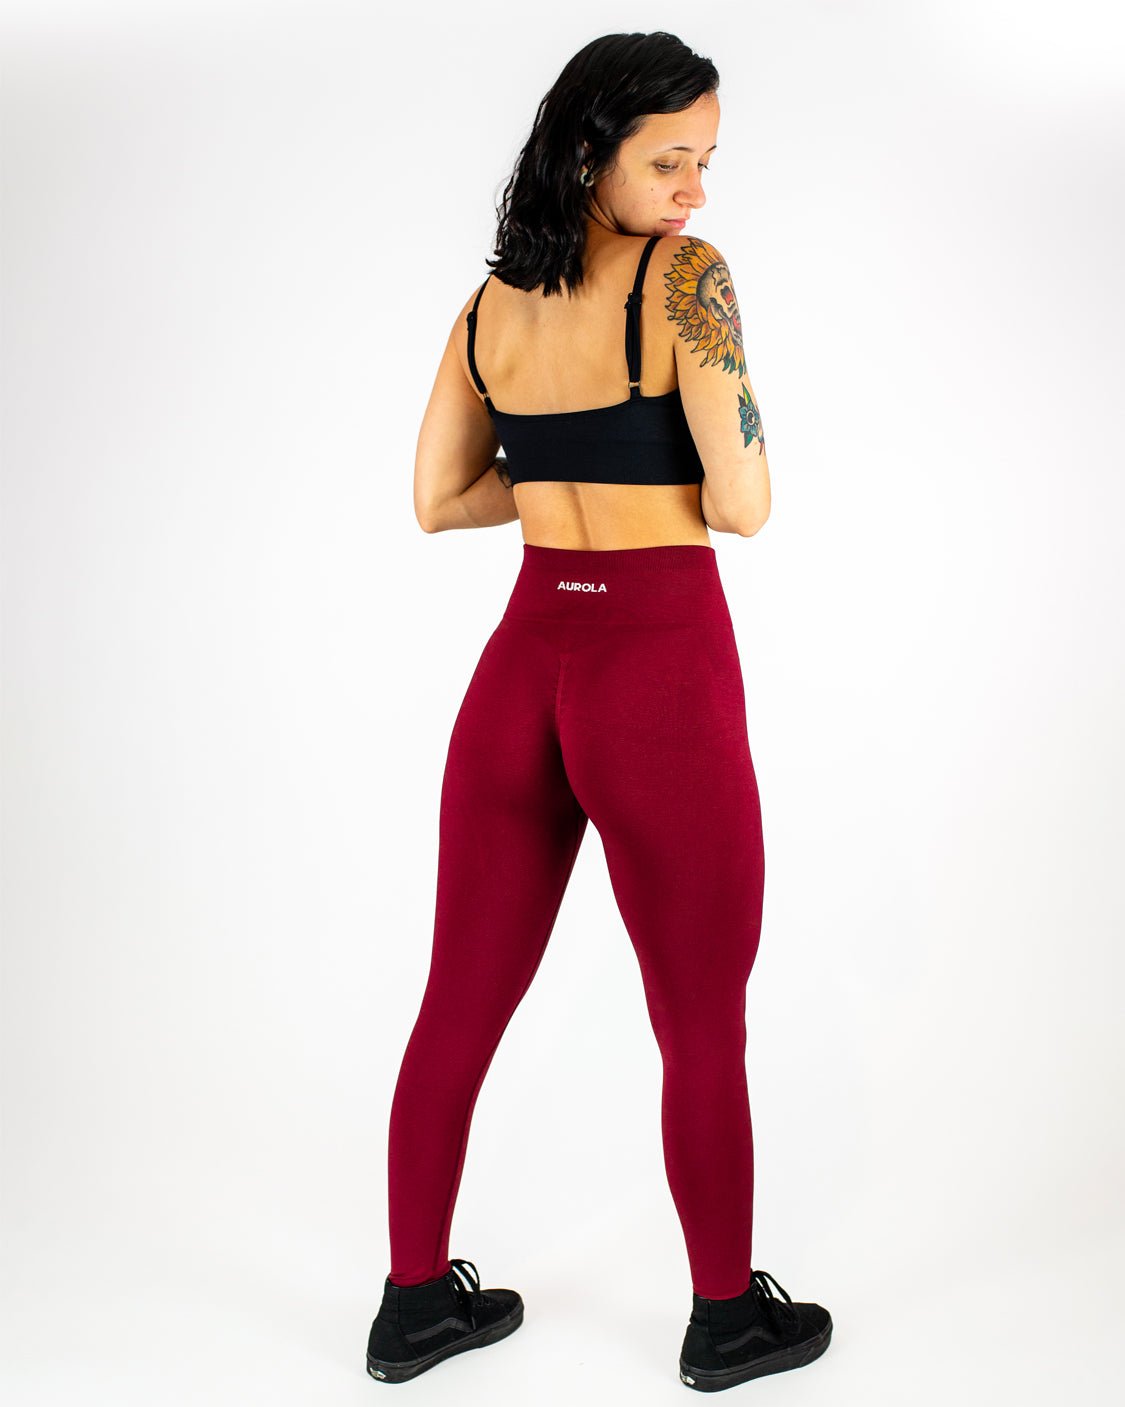 Firm Ass in aurola leggings - Spandex, Leggings & Yoga Pants - Forum